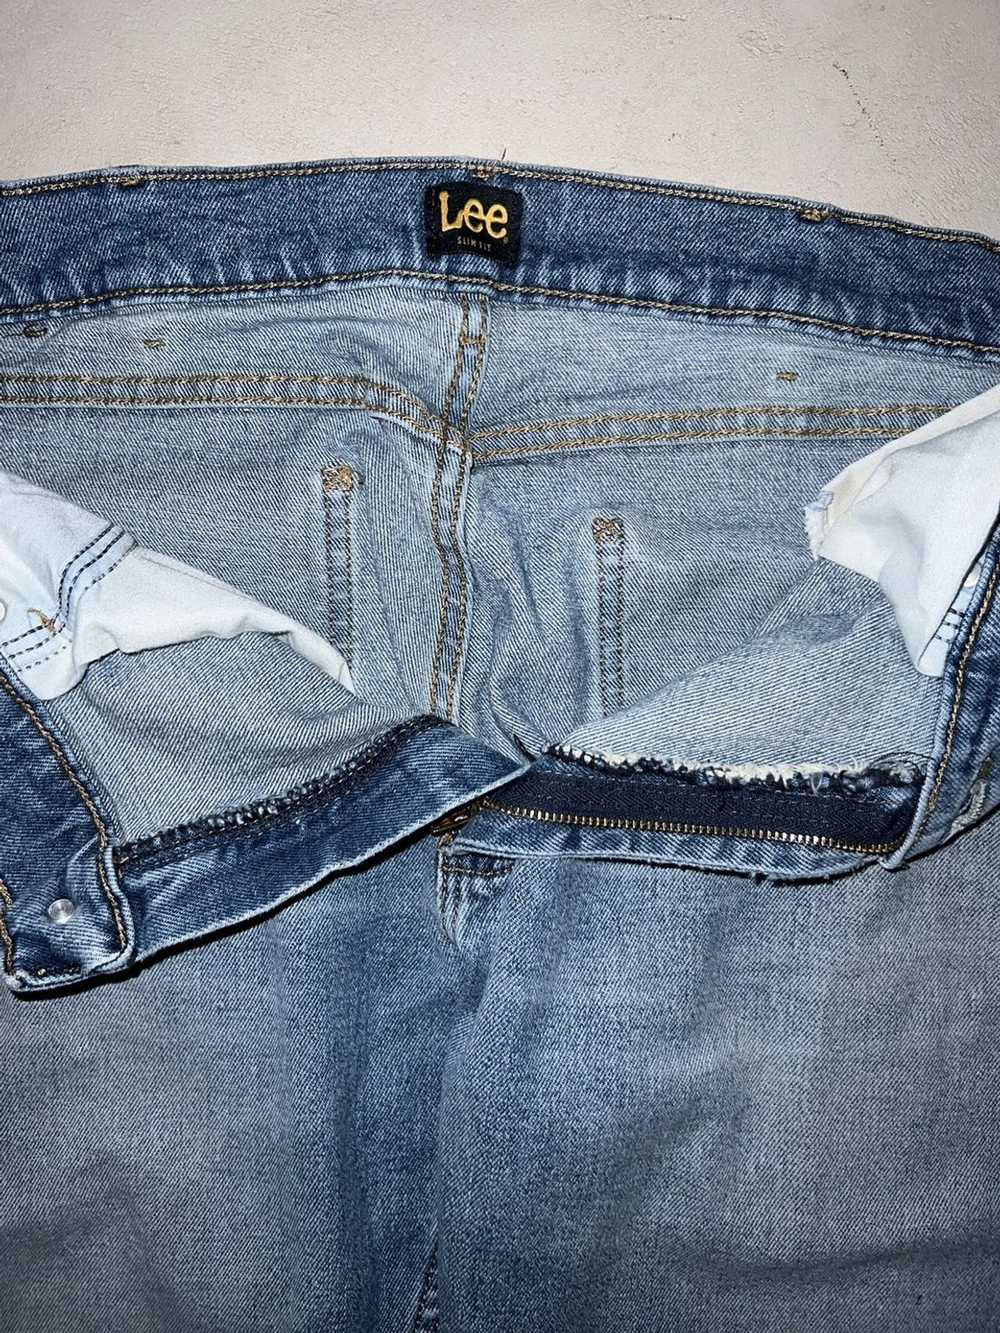 Lee × Vintage Lee 32x30 Slim Fit Blue Denim Jeans - image 3